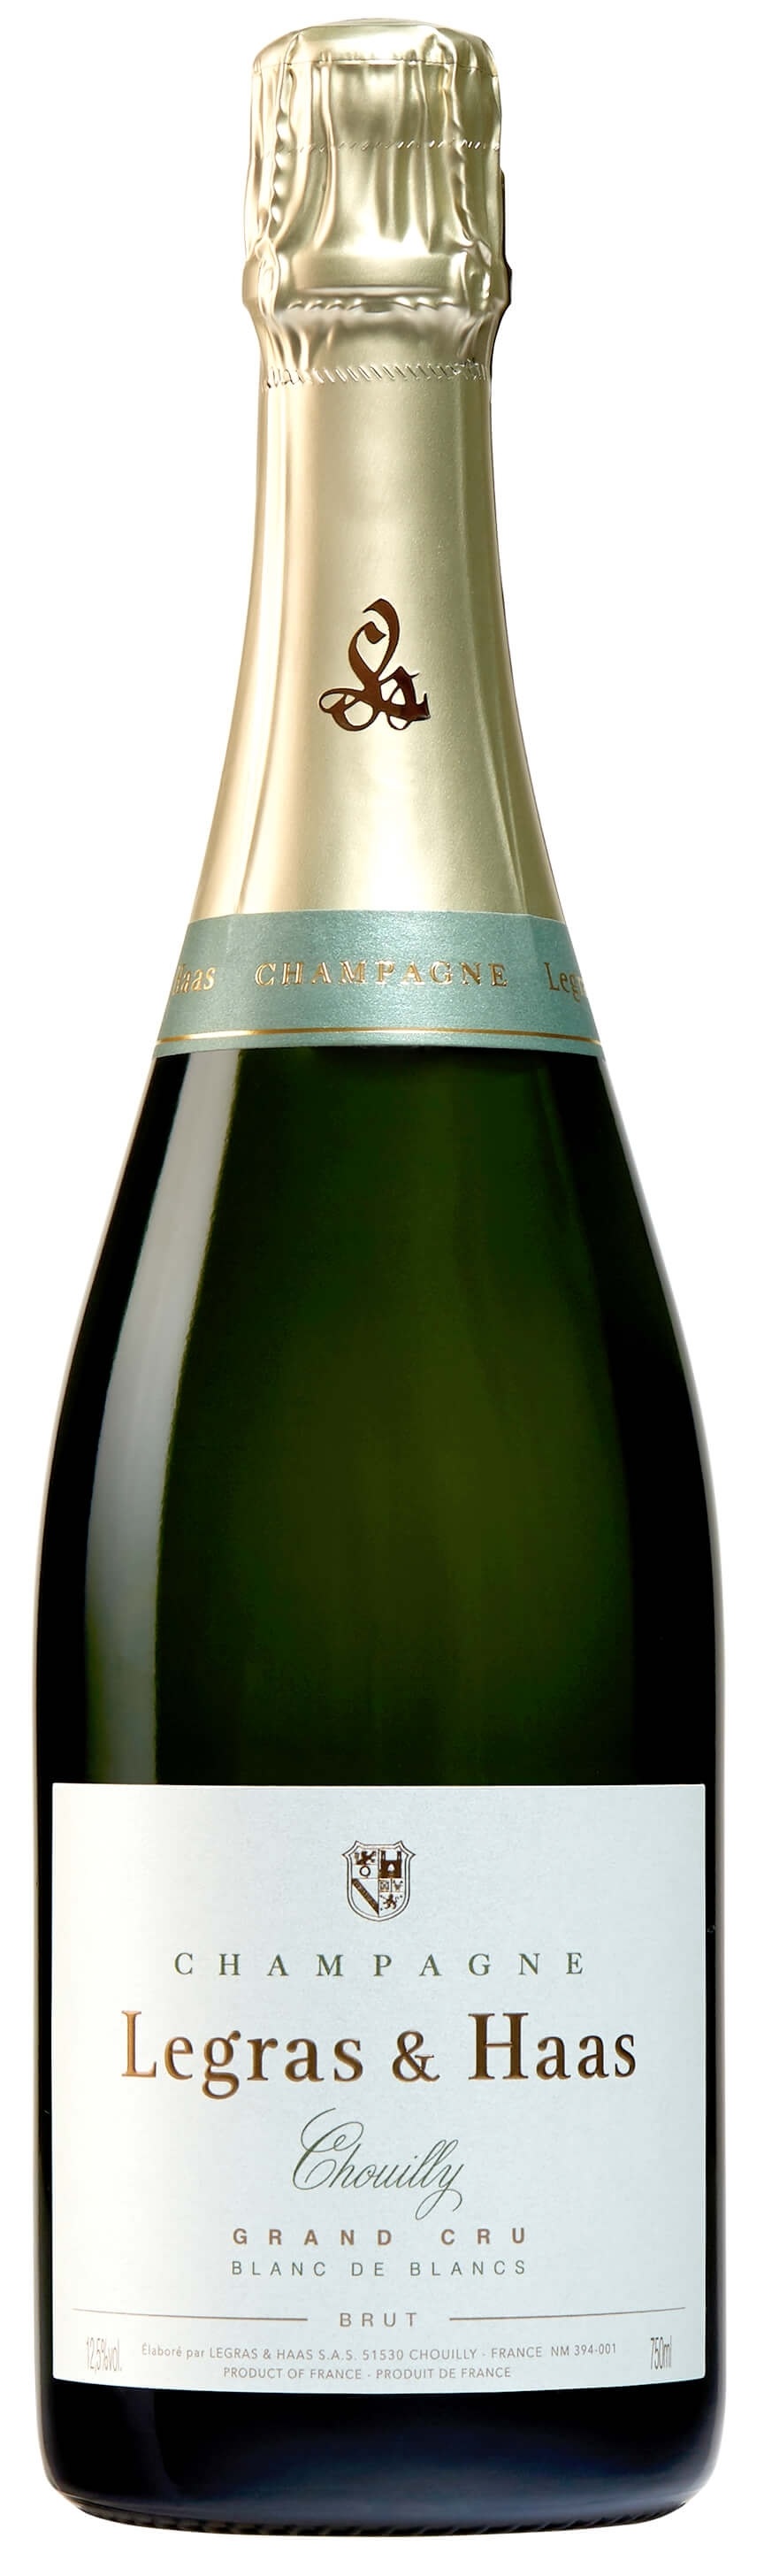 Champagne Legras & Haas Chouilly Grand Cru Blanc de Blancs